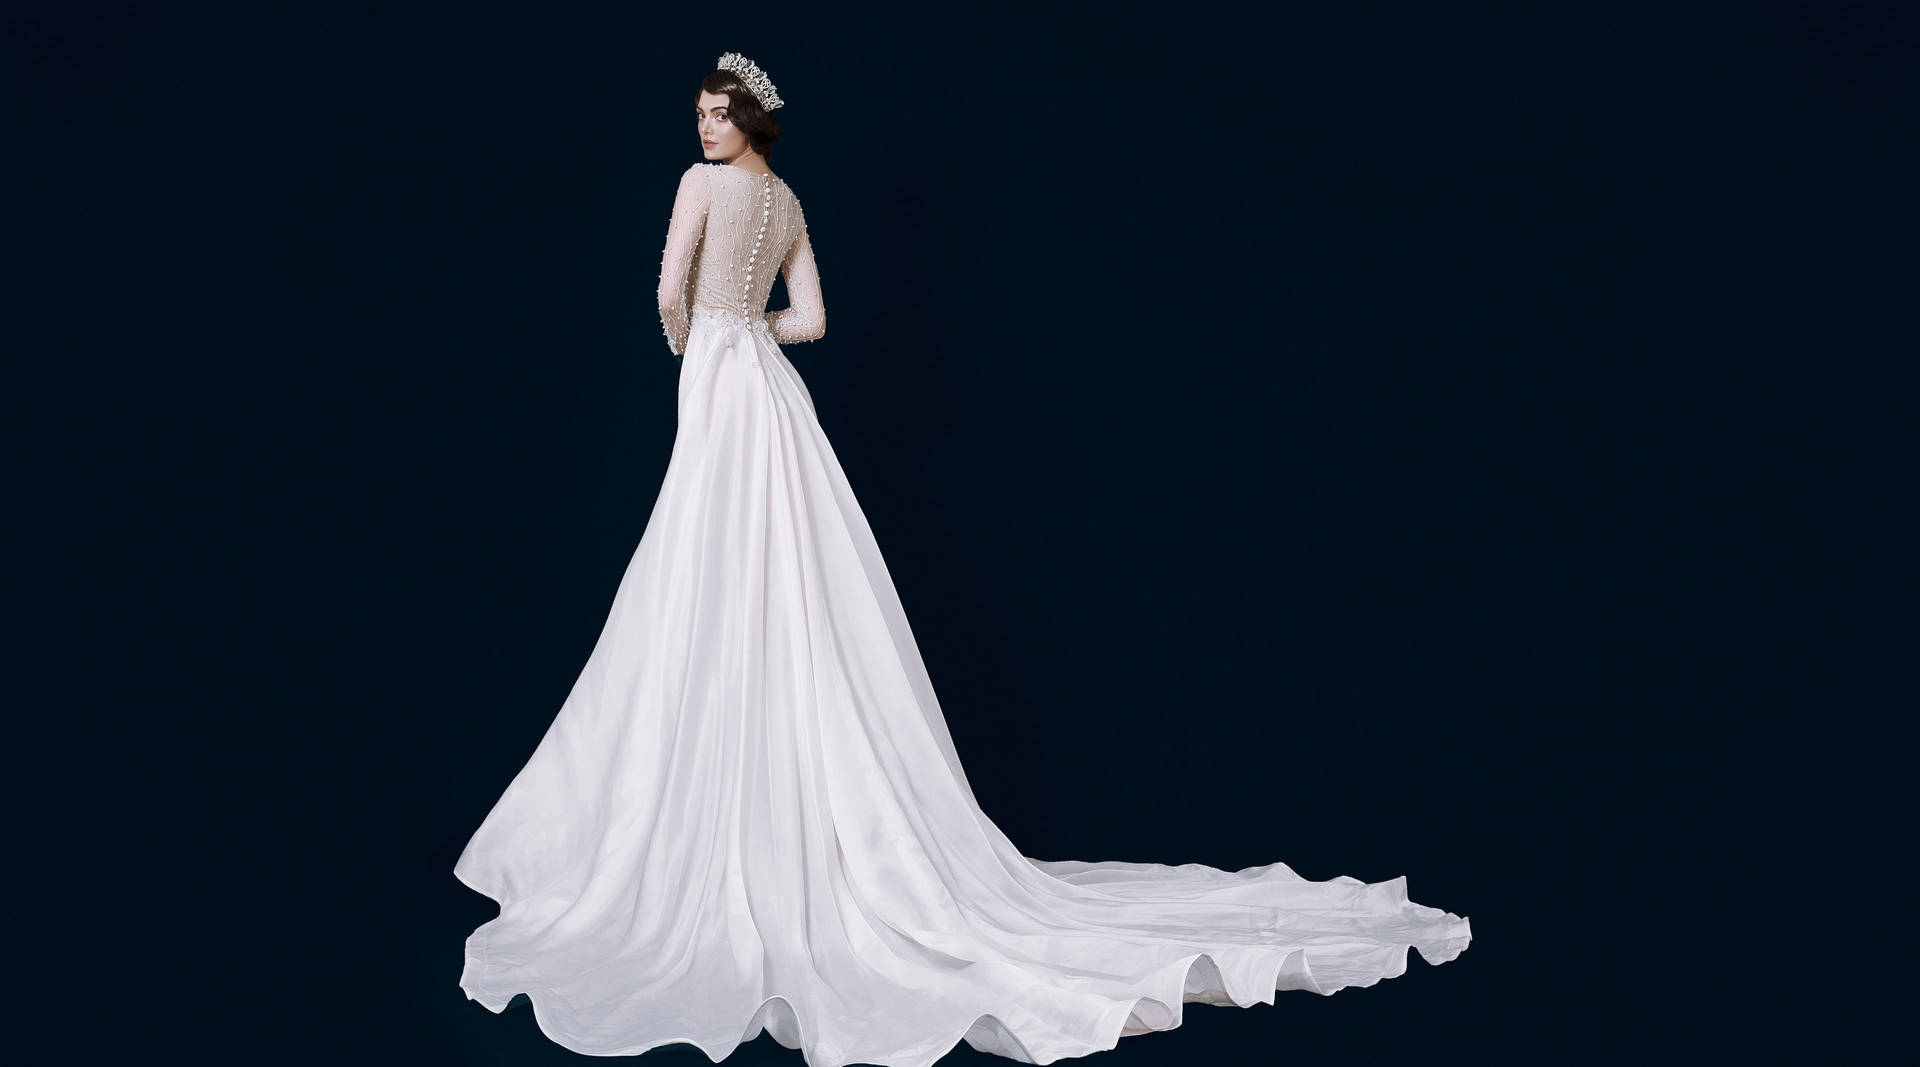 Classic Princess Wedding Dress Background